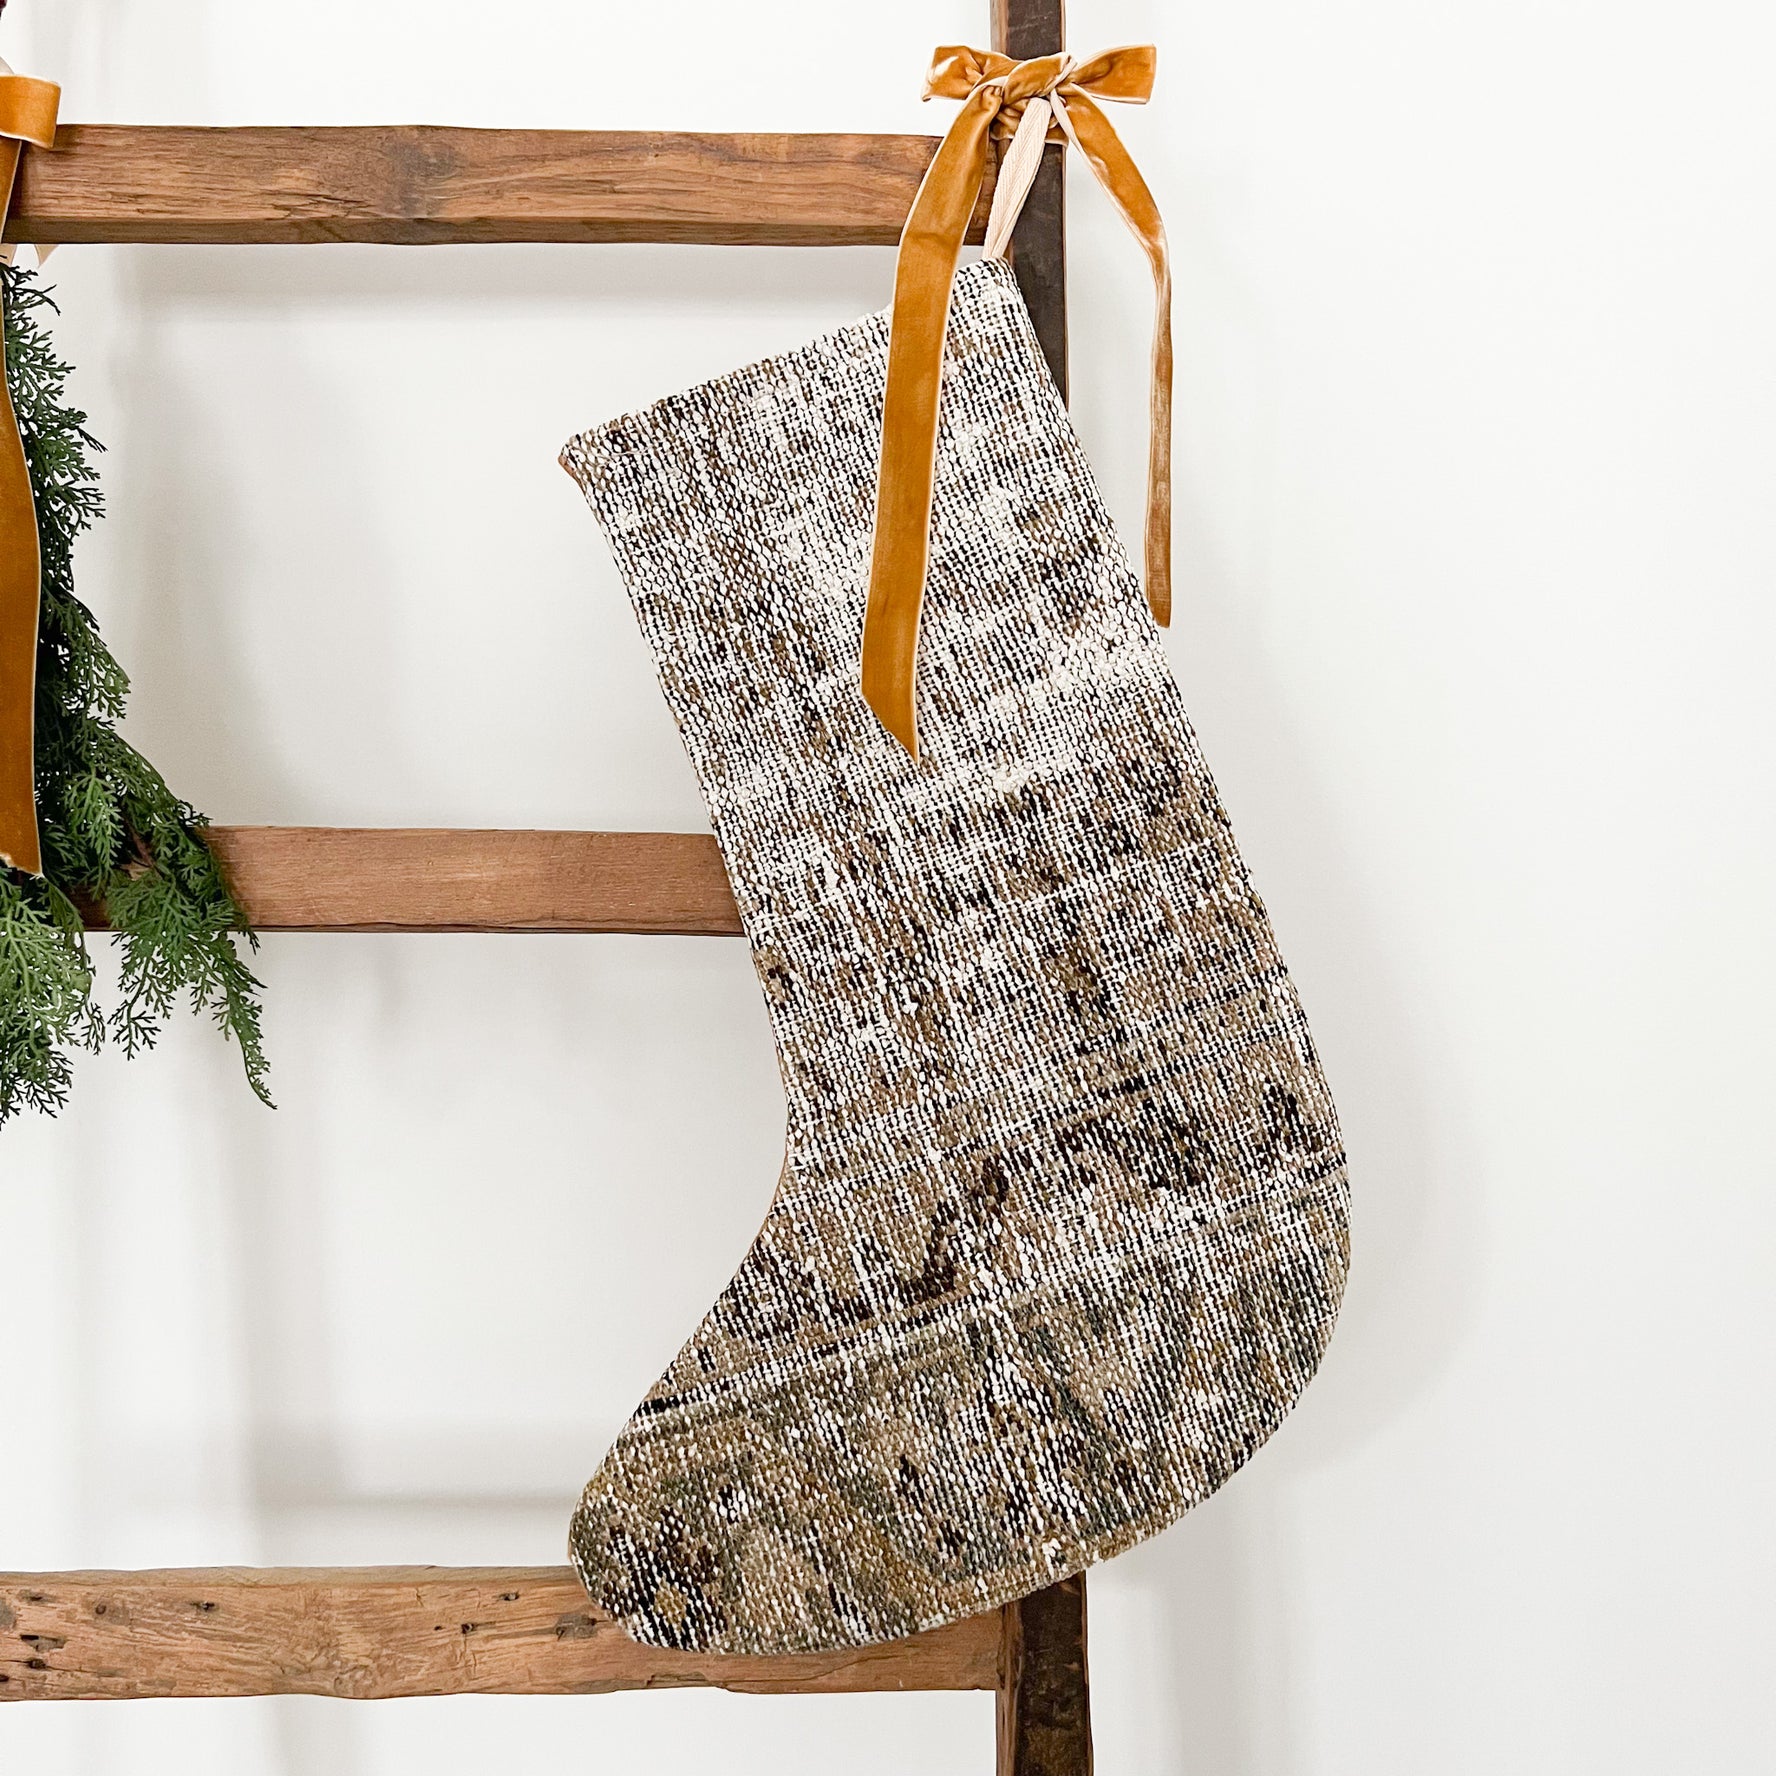 Noelle Antique Kilim Christmas Stocking